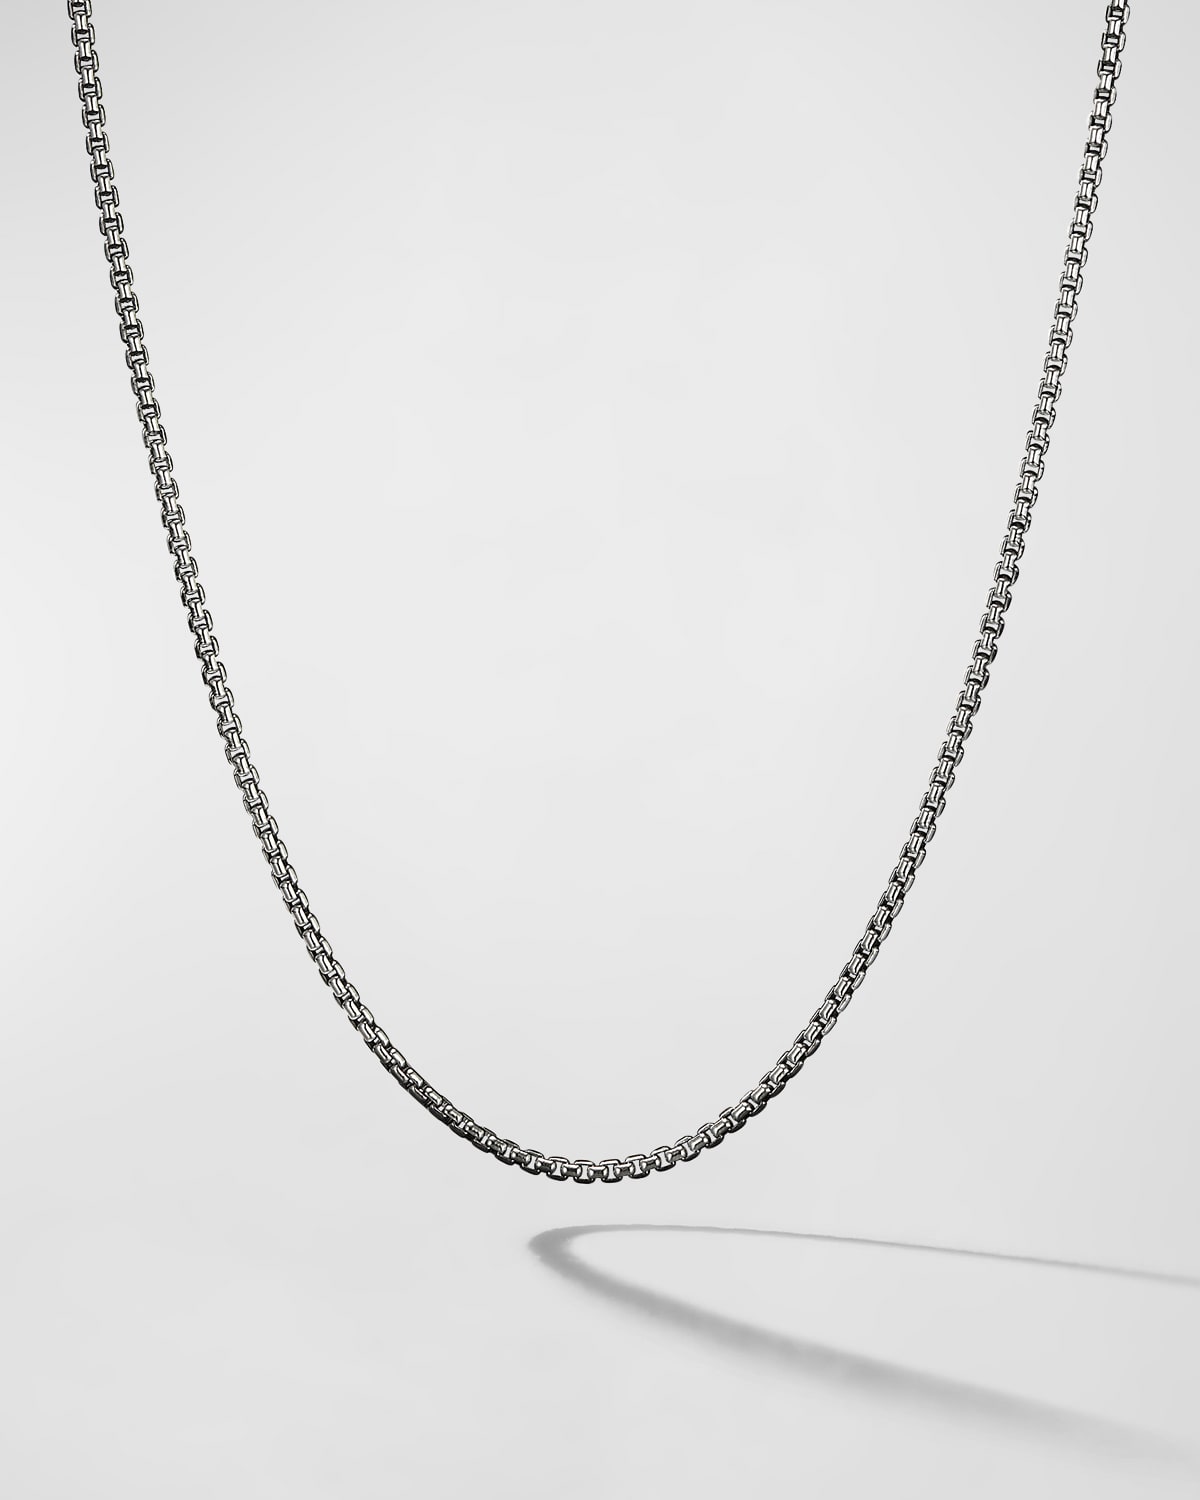 David Yurman Men's Box Chain Necklace In Sterling Silver, 1.7mm, 18"l